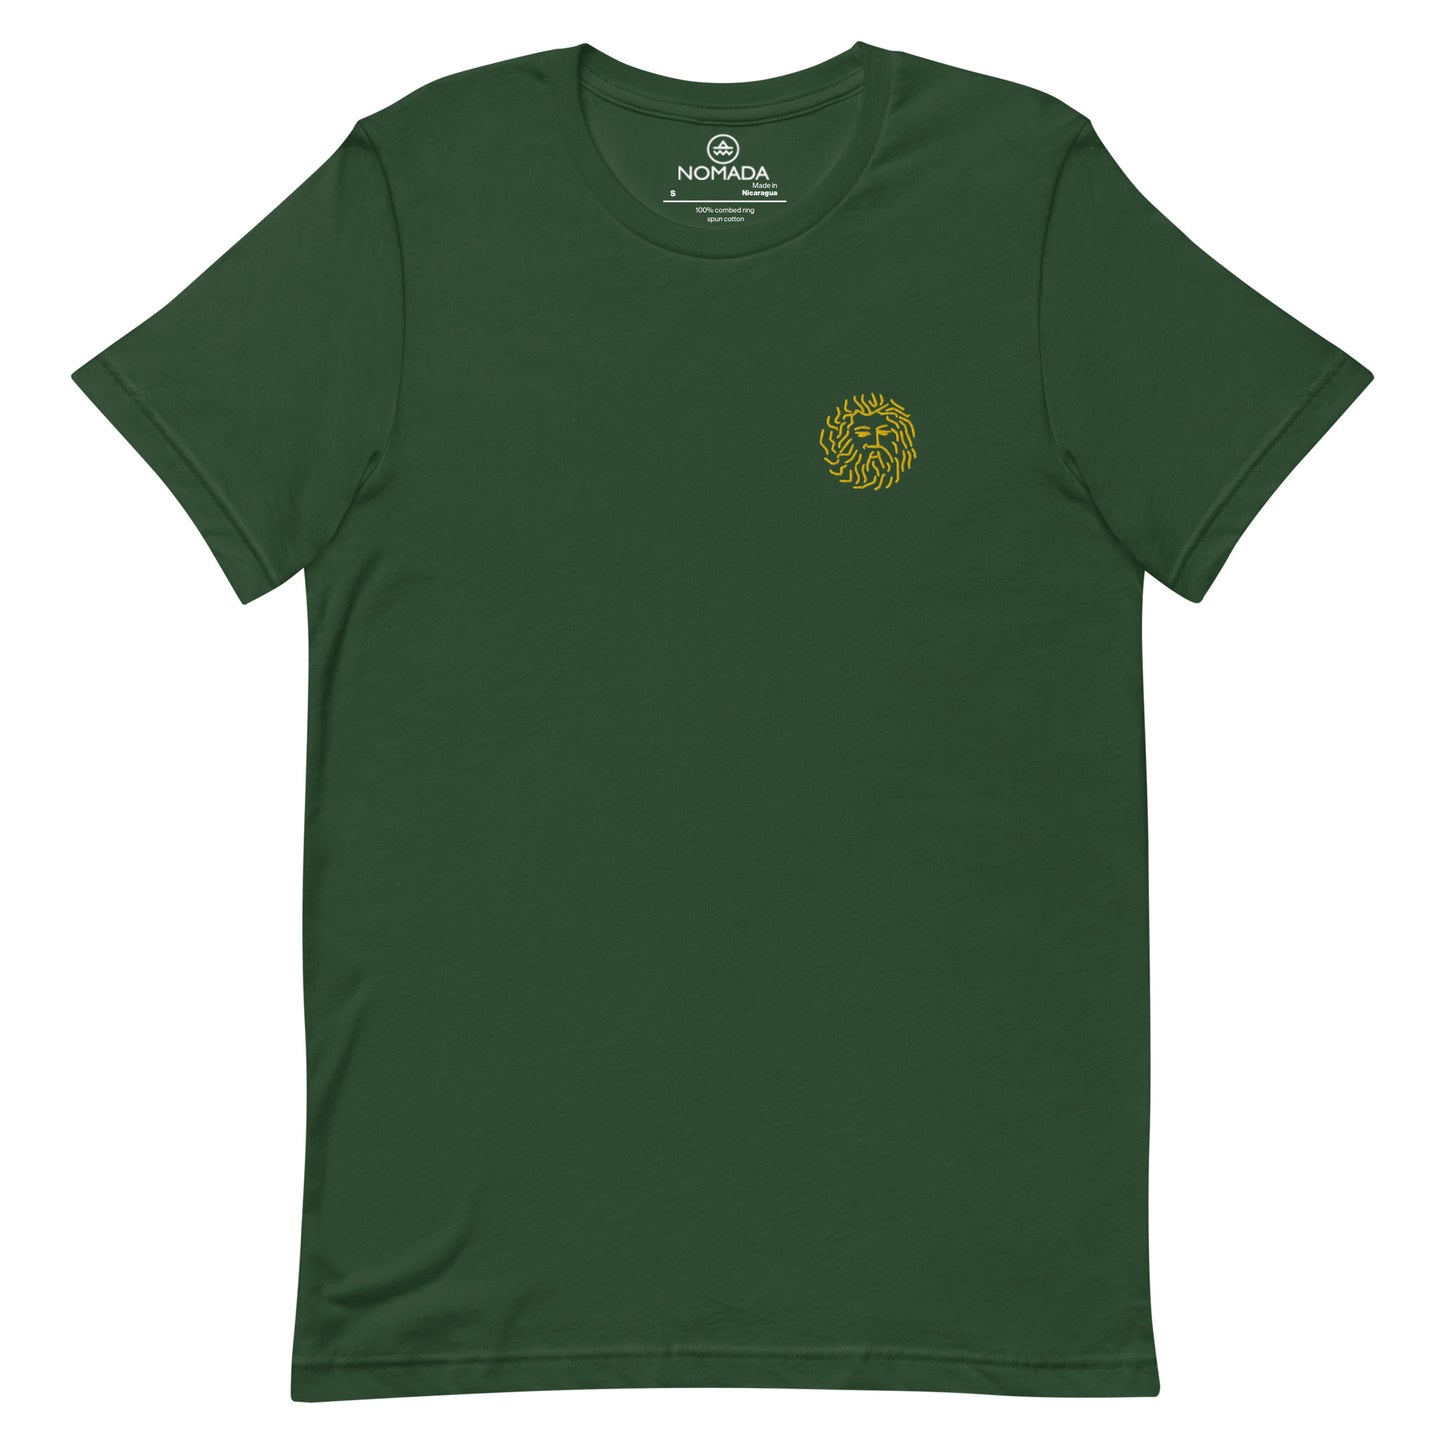 NOMADA Poseidon Beard Embroidered T-shirt, Forest Green color shirt